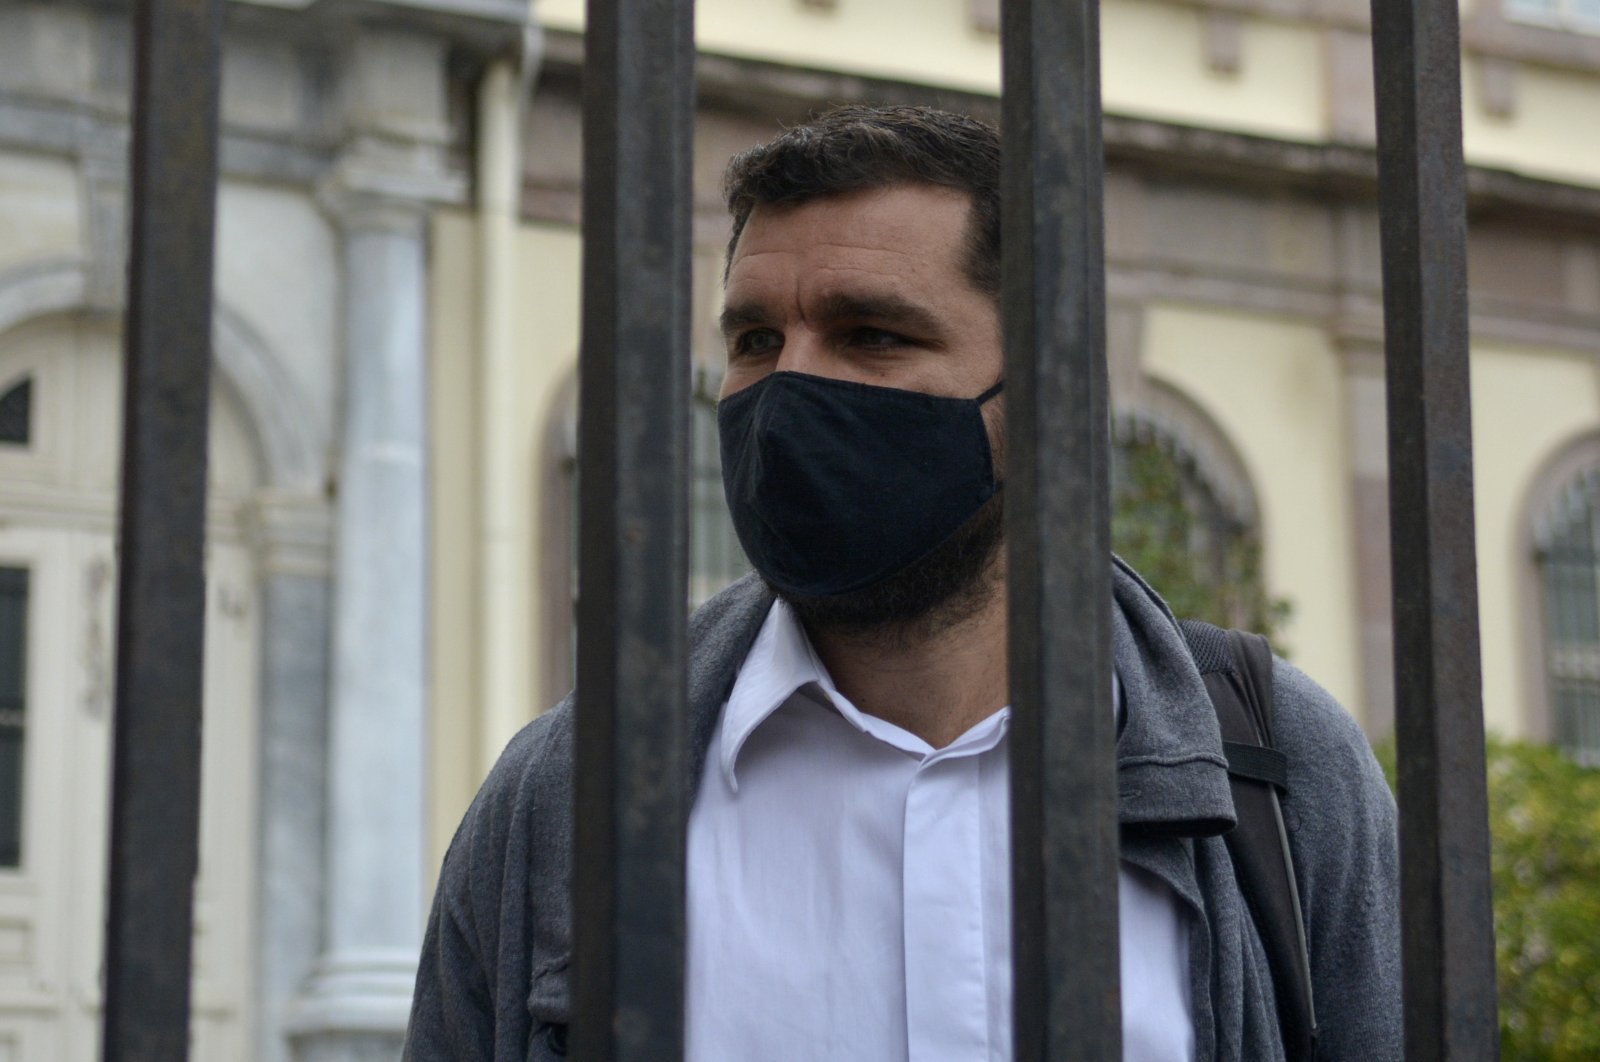 24 aktivis muncul di pengadilan karena menyelamatkan migran: Yunani